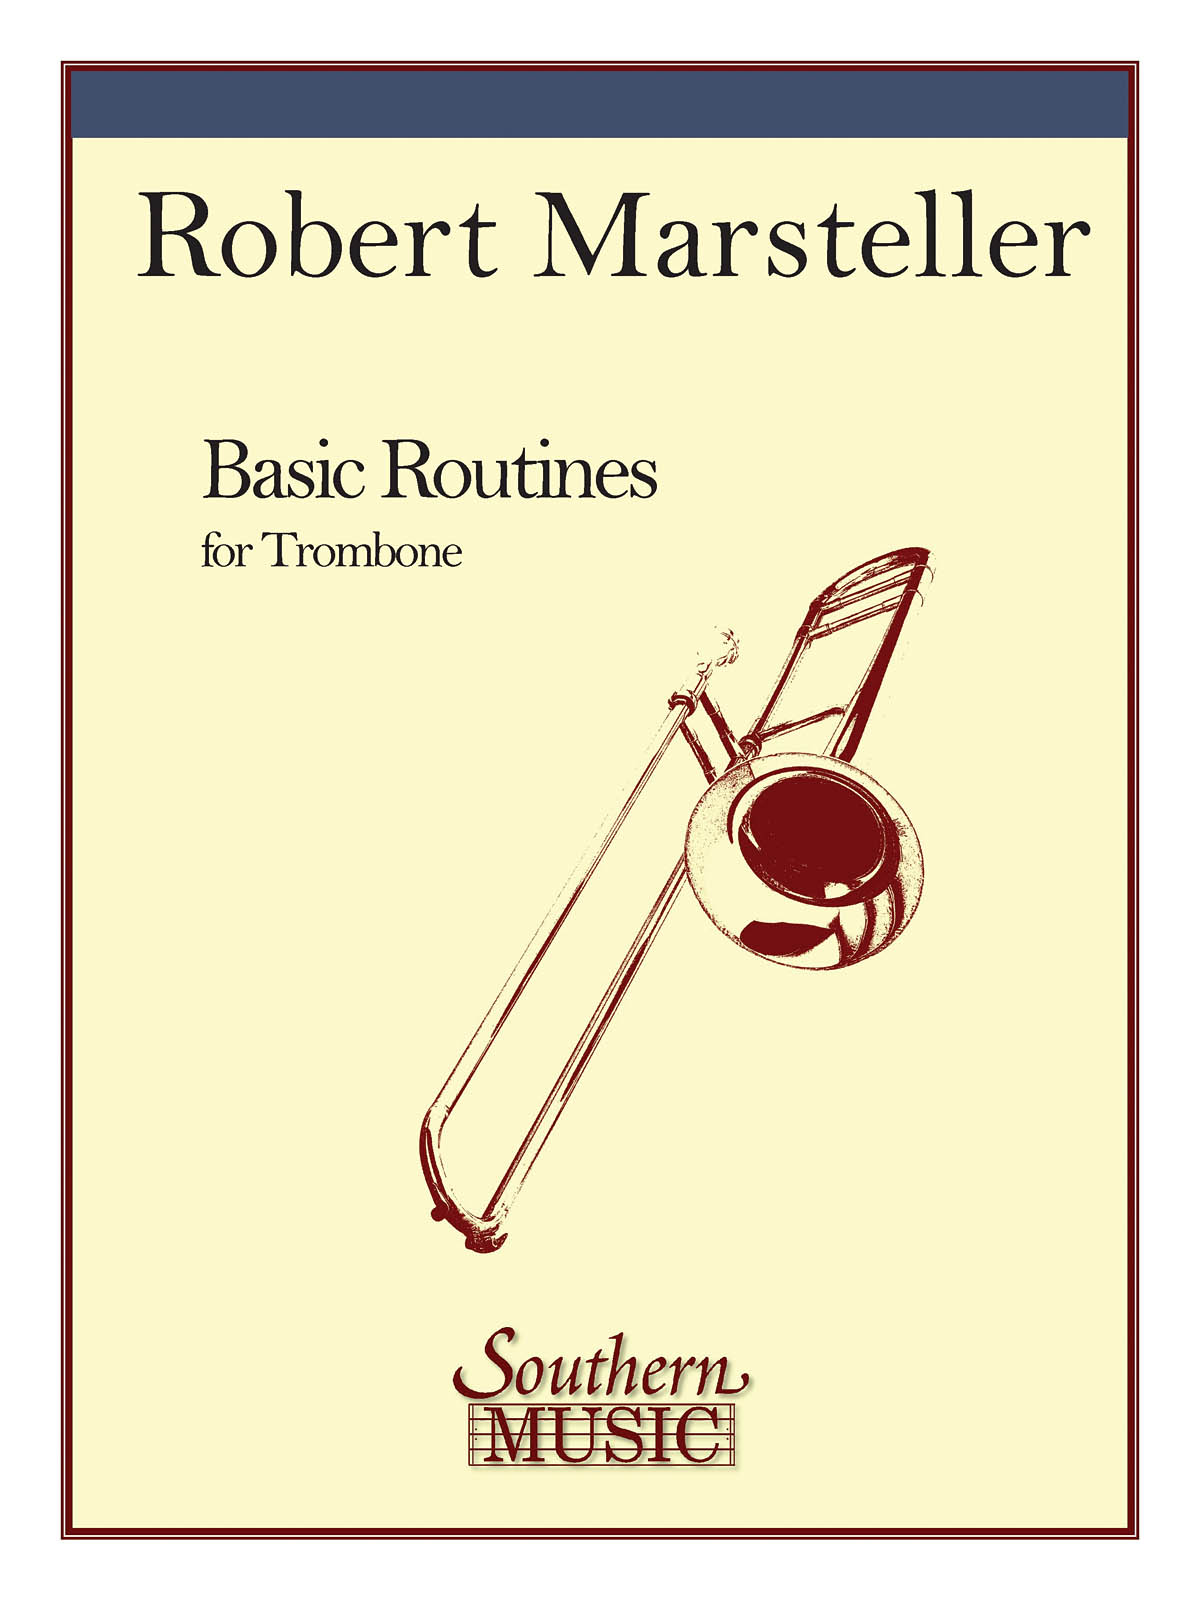 Basic Routines - skladby pro trombon